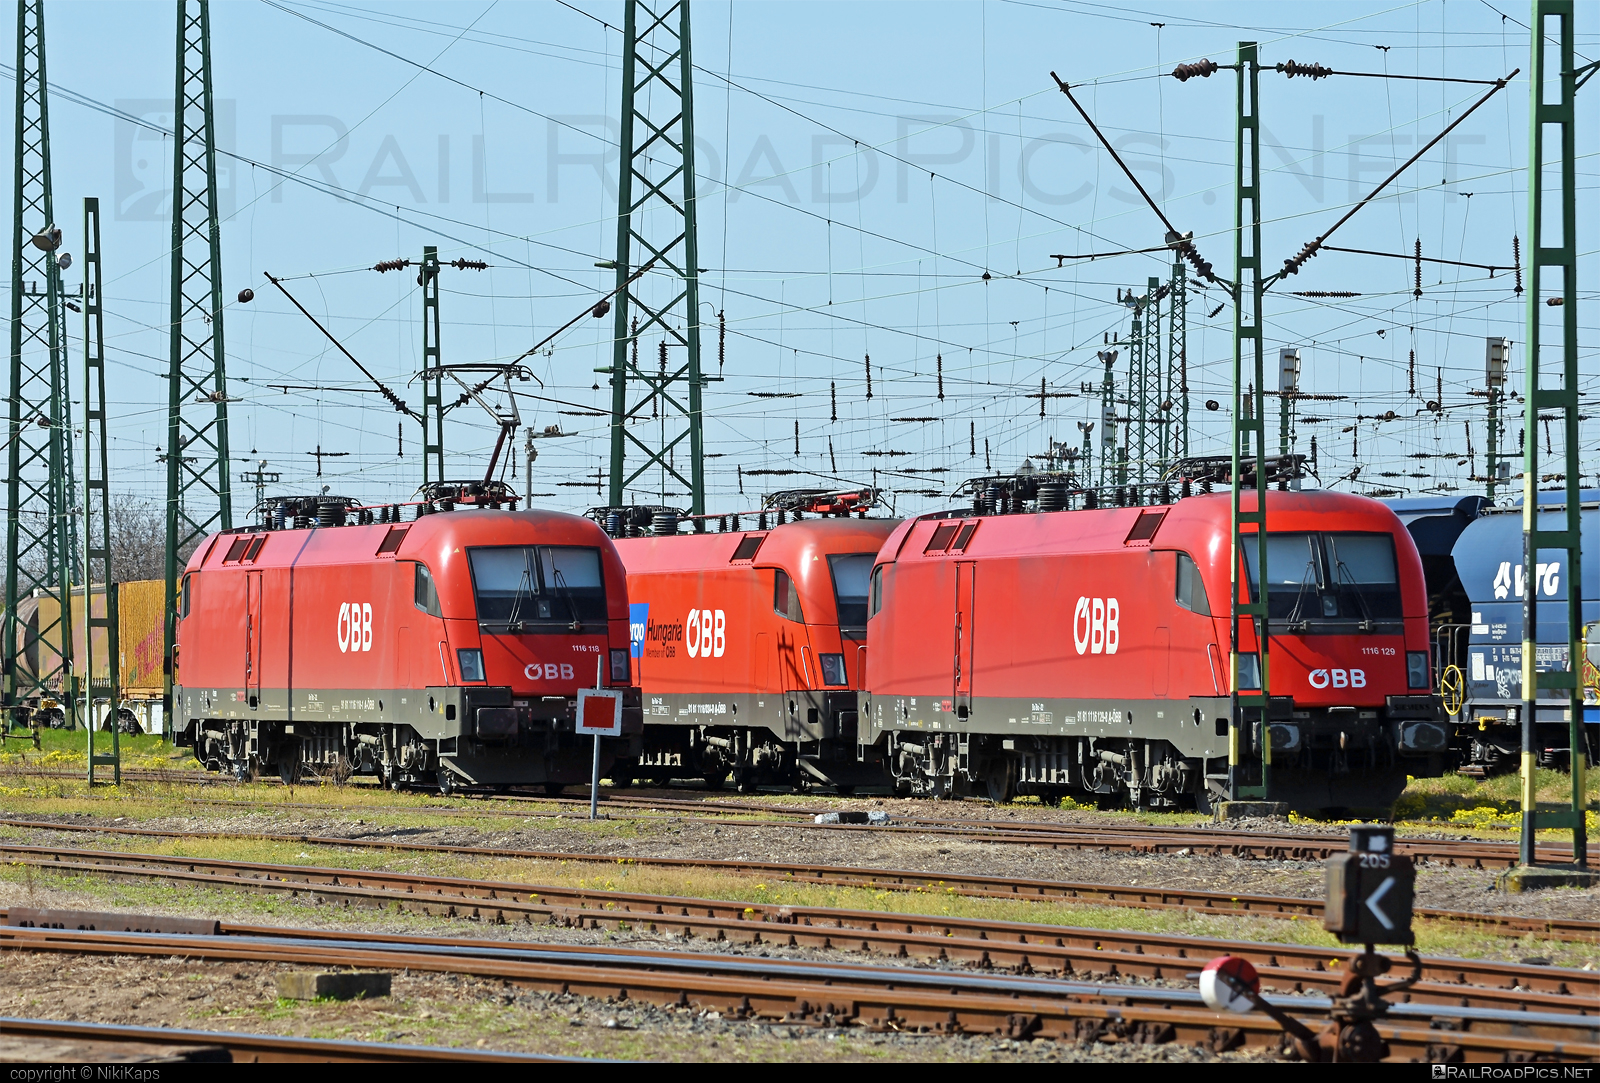 Siemens ES 64 U2 - 1116 118 operated by Rail Cargo Hungaria ZRt. #es64 #es64u2 #eurosprinter #obb #osterreichischebundesbahnen #rch #siemens #siemensEs64 #siemensEs64u2 #siemenstaurus #taurus #tauruslocomotive